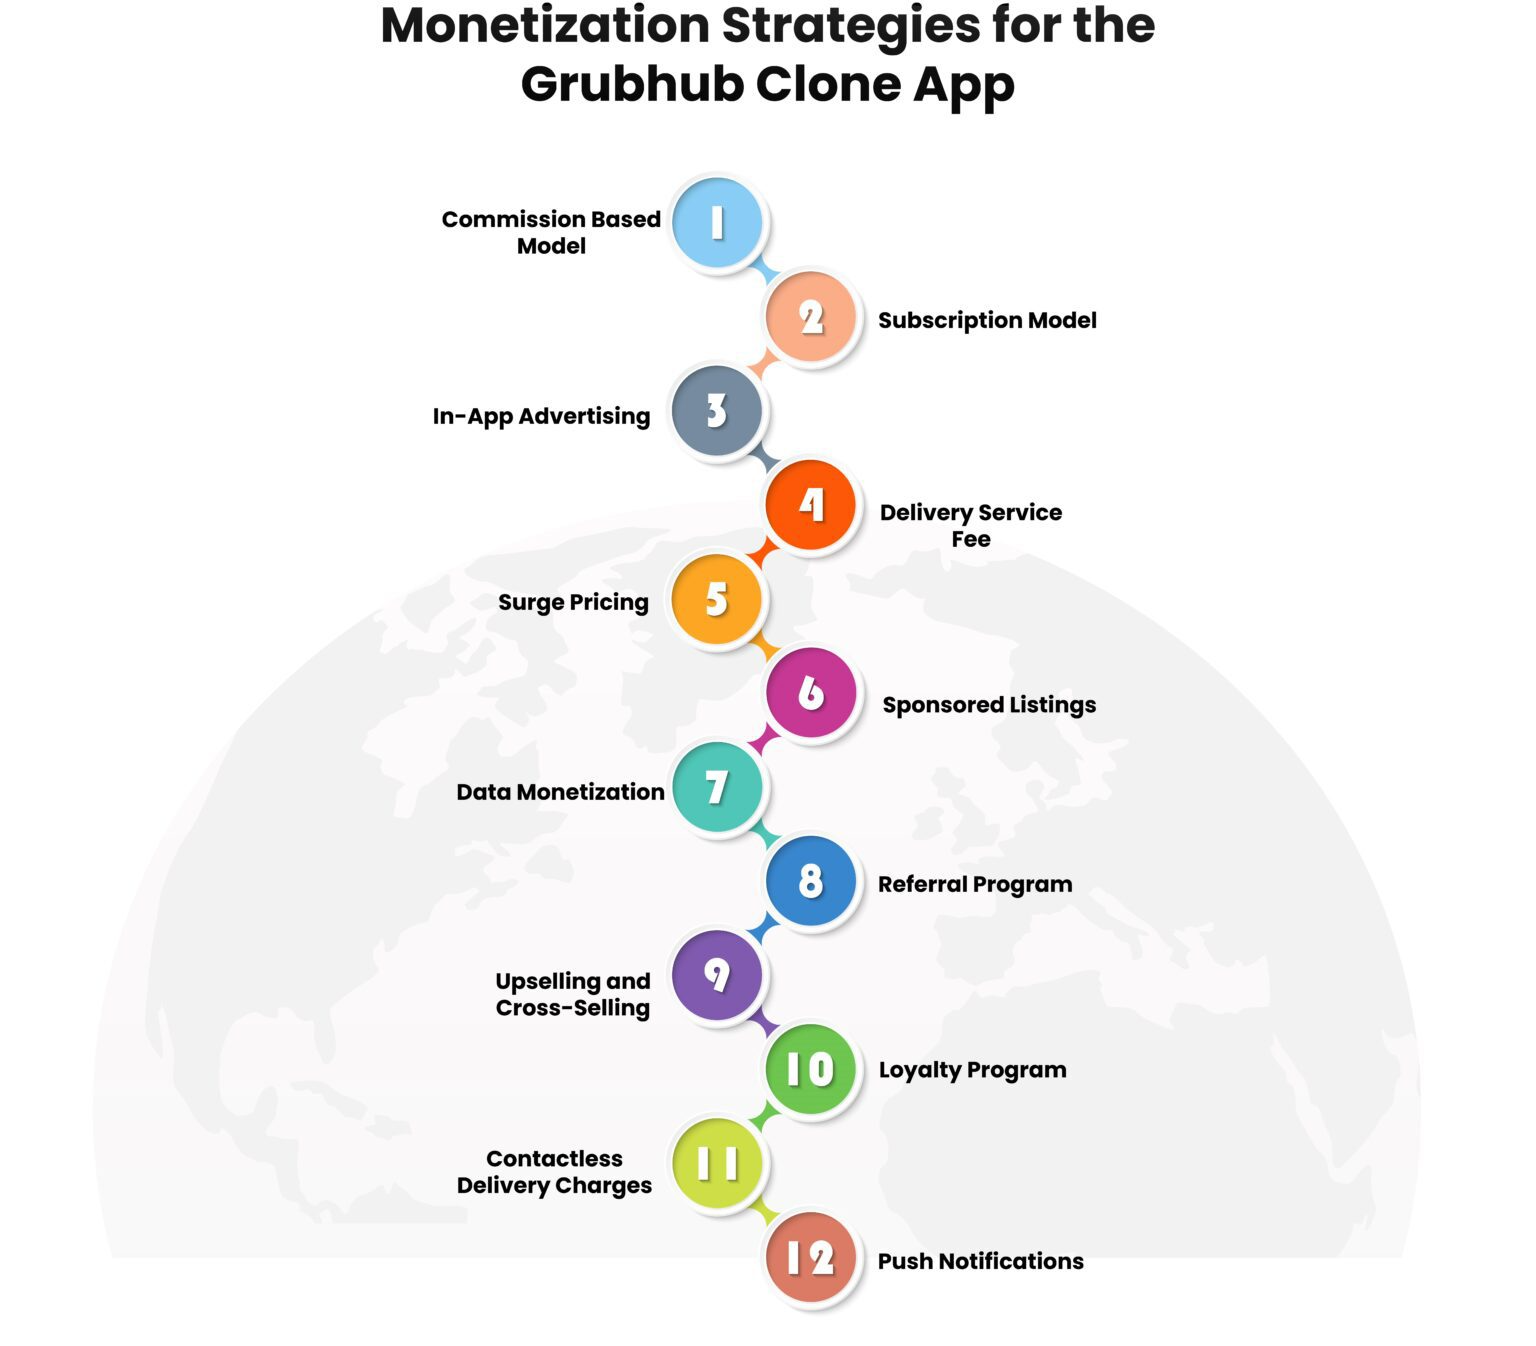 Monetization Strategies for the Grubhub Clone App